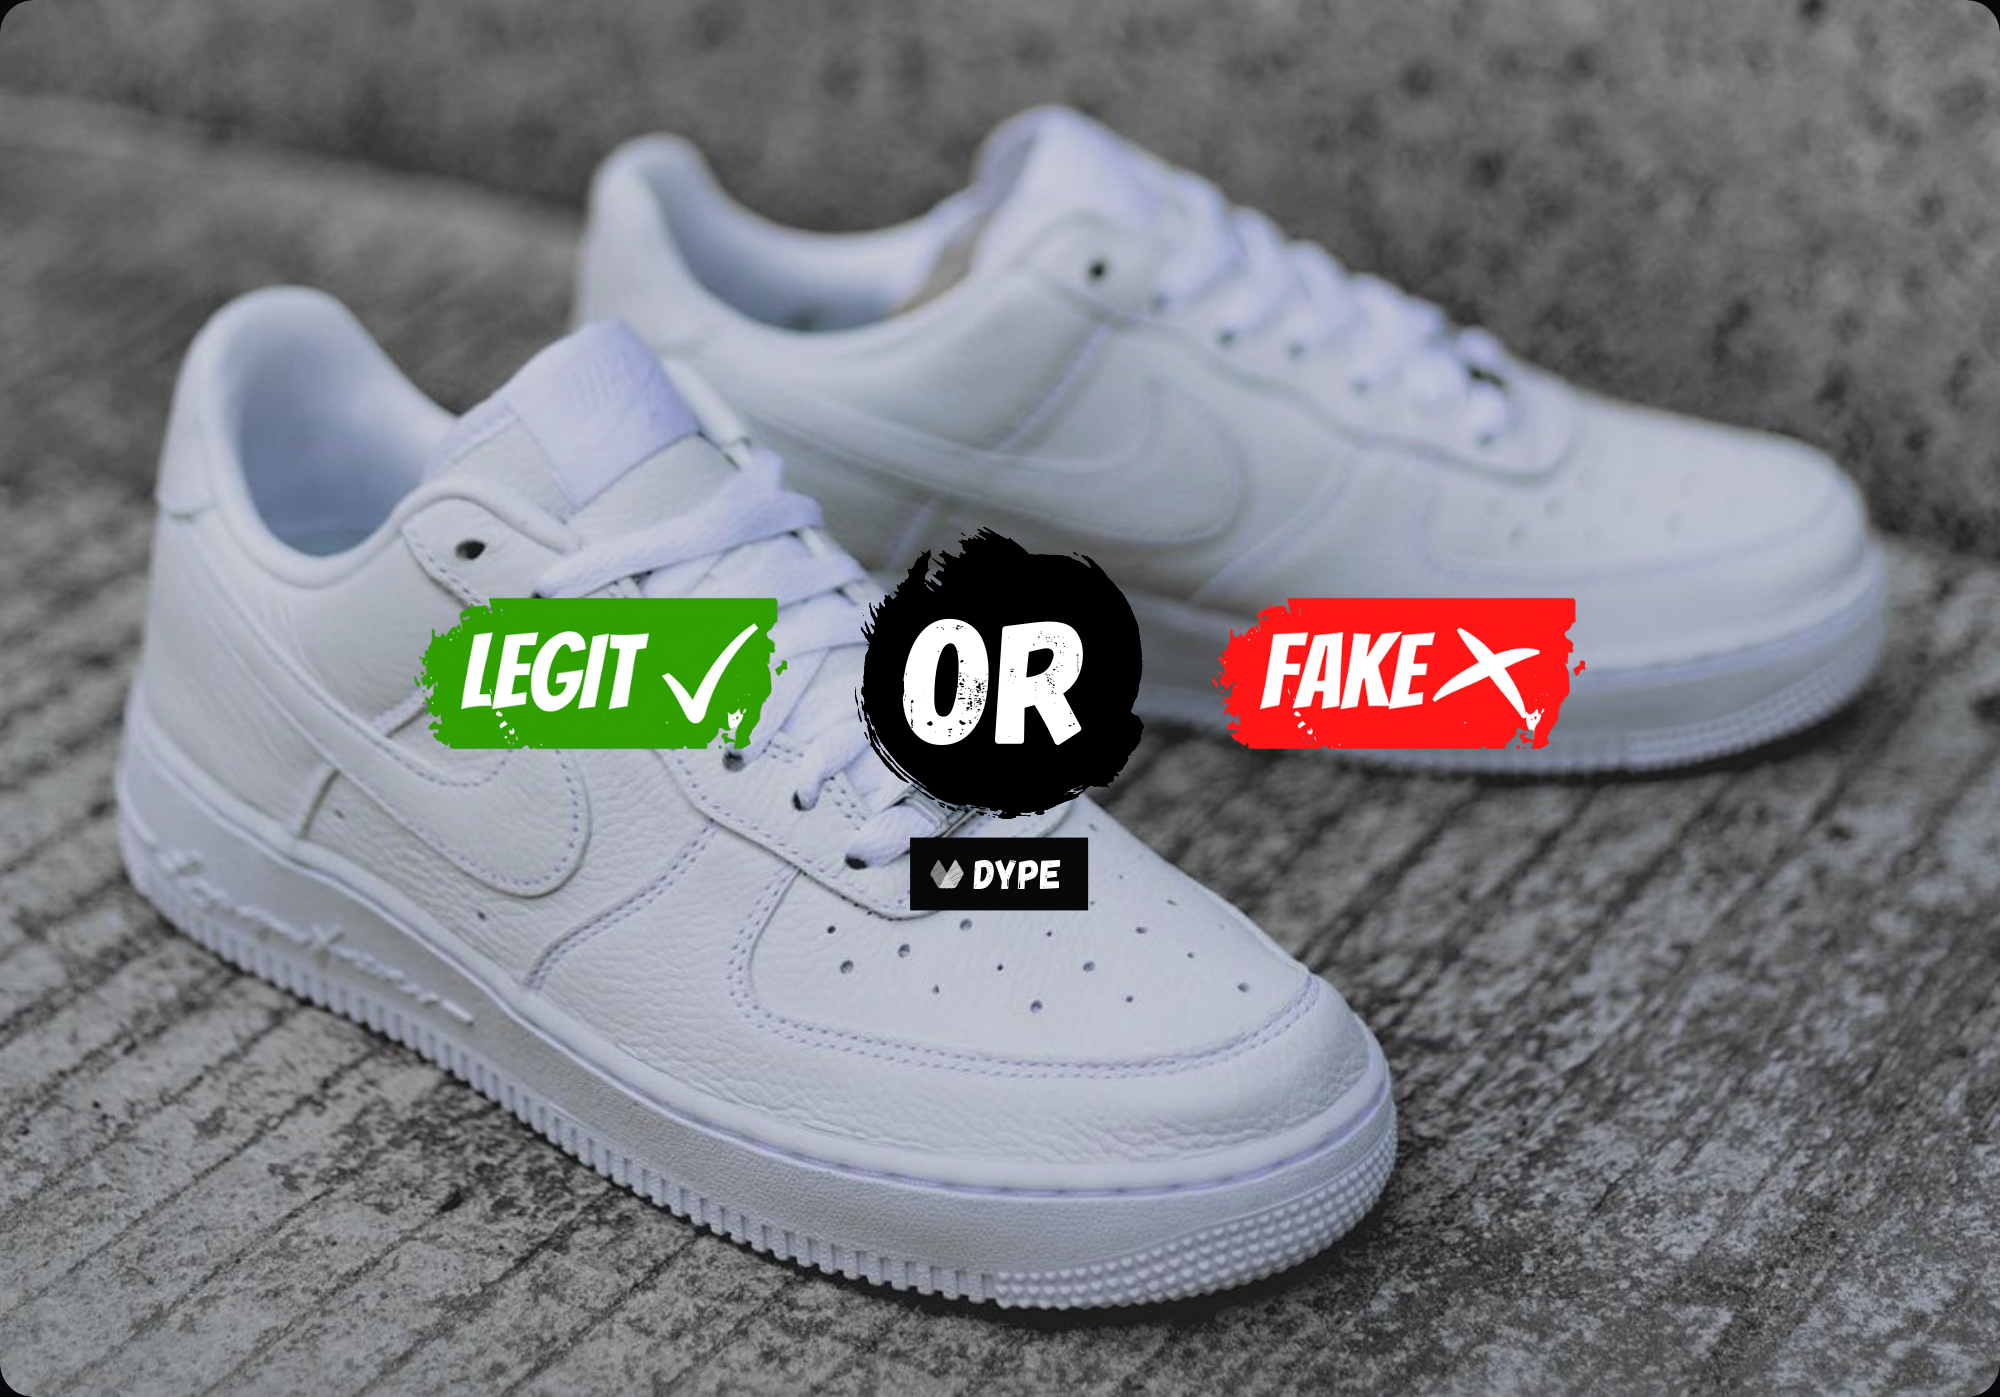 How To Spot Fake Nike Air Force 1 Louis Vuitton - Legit Check By Ch